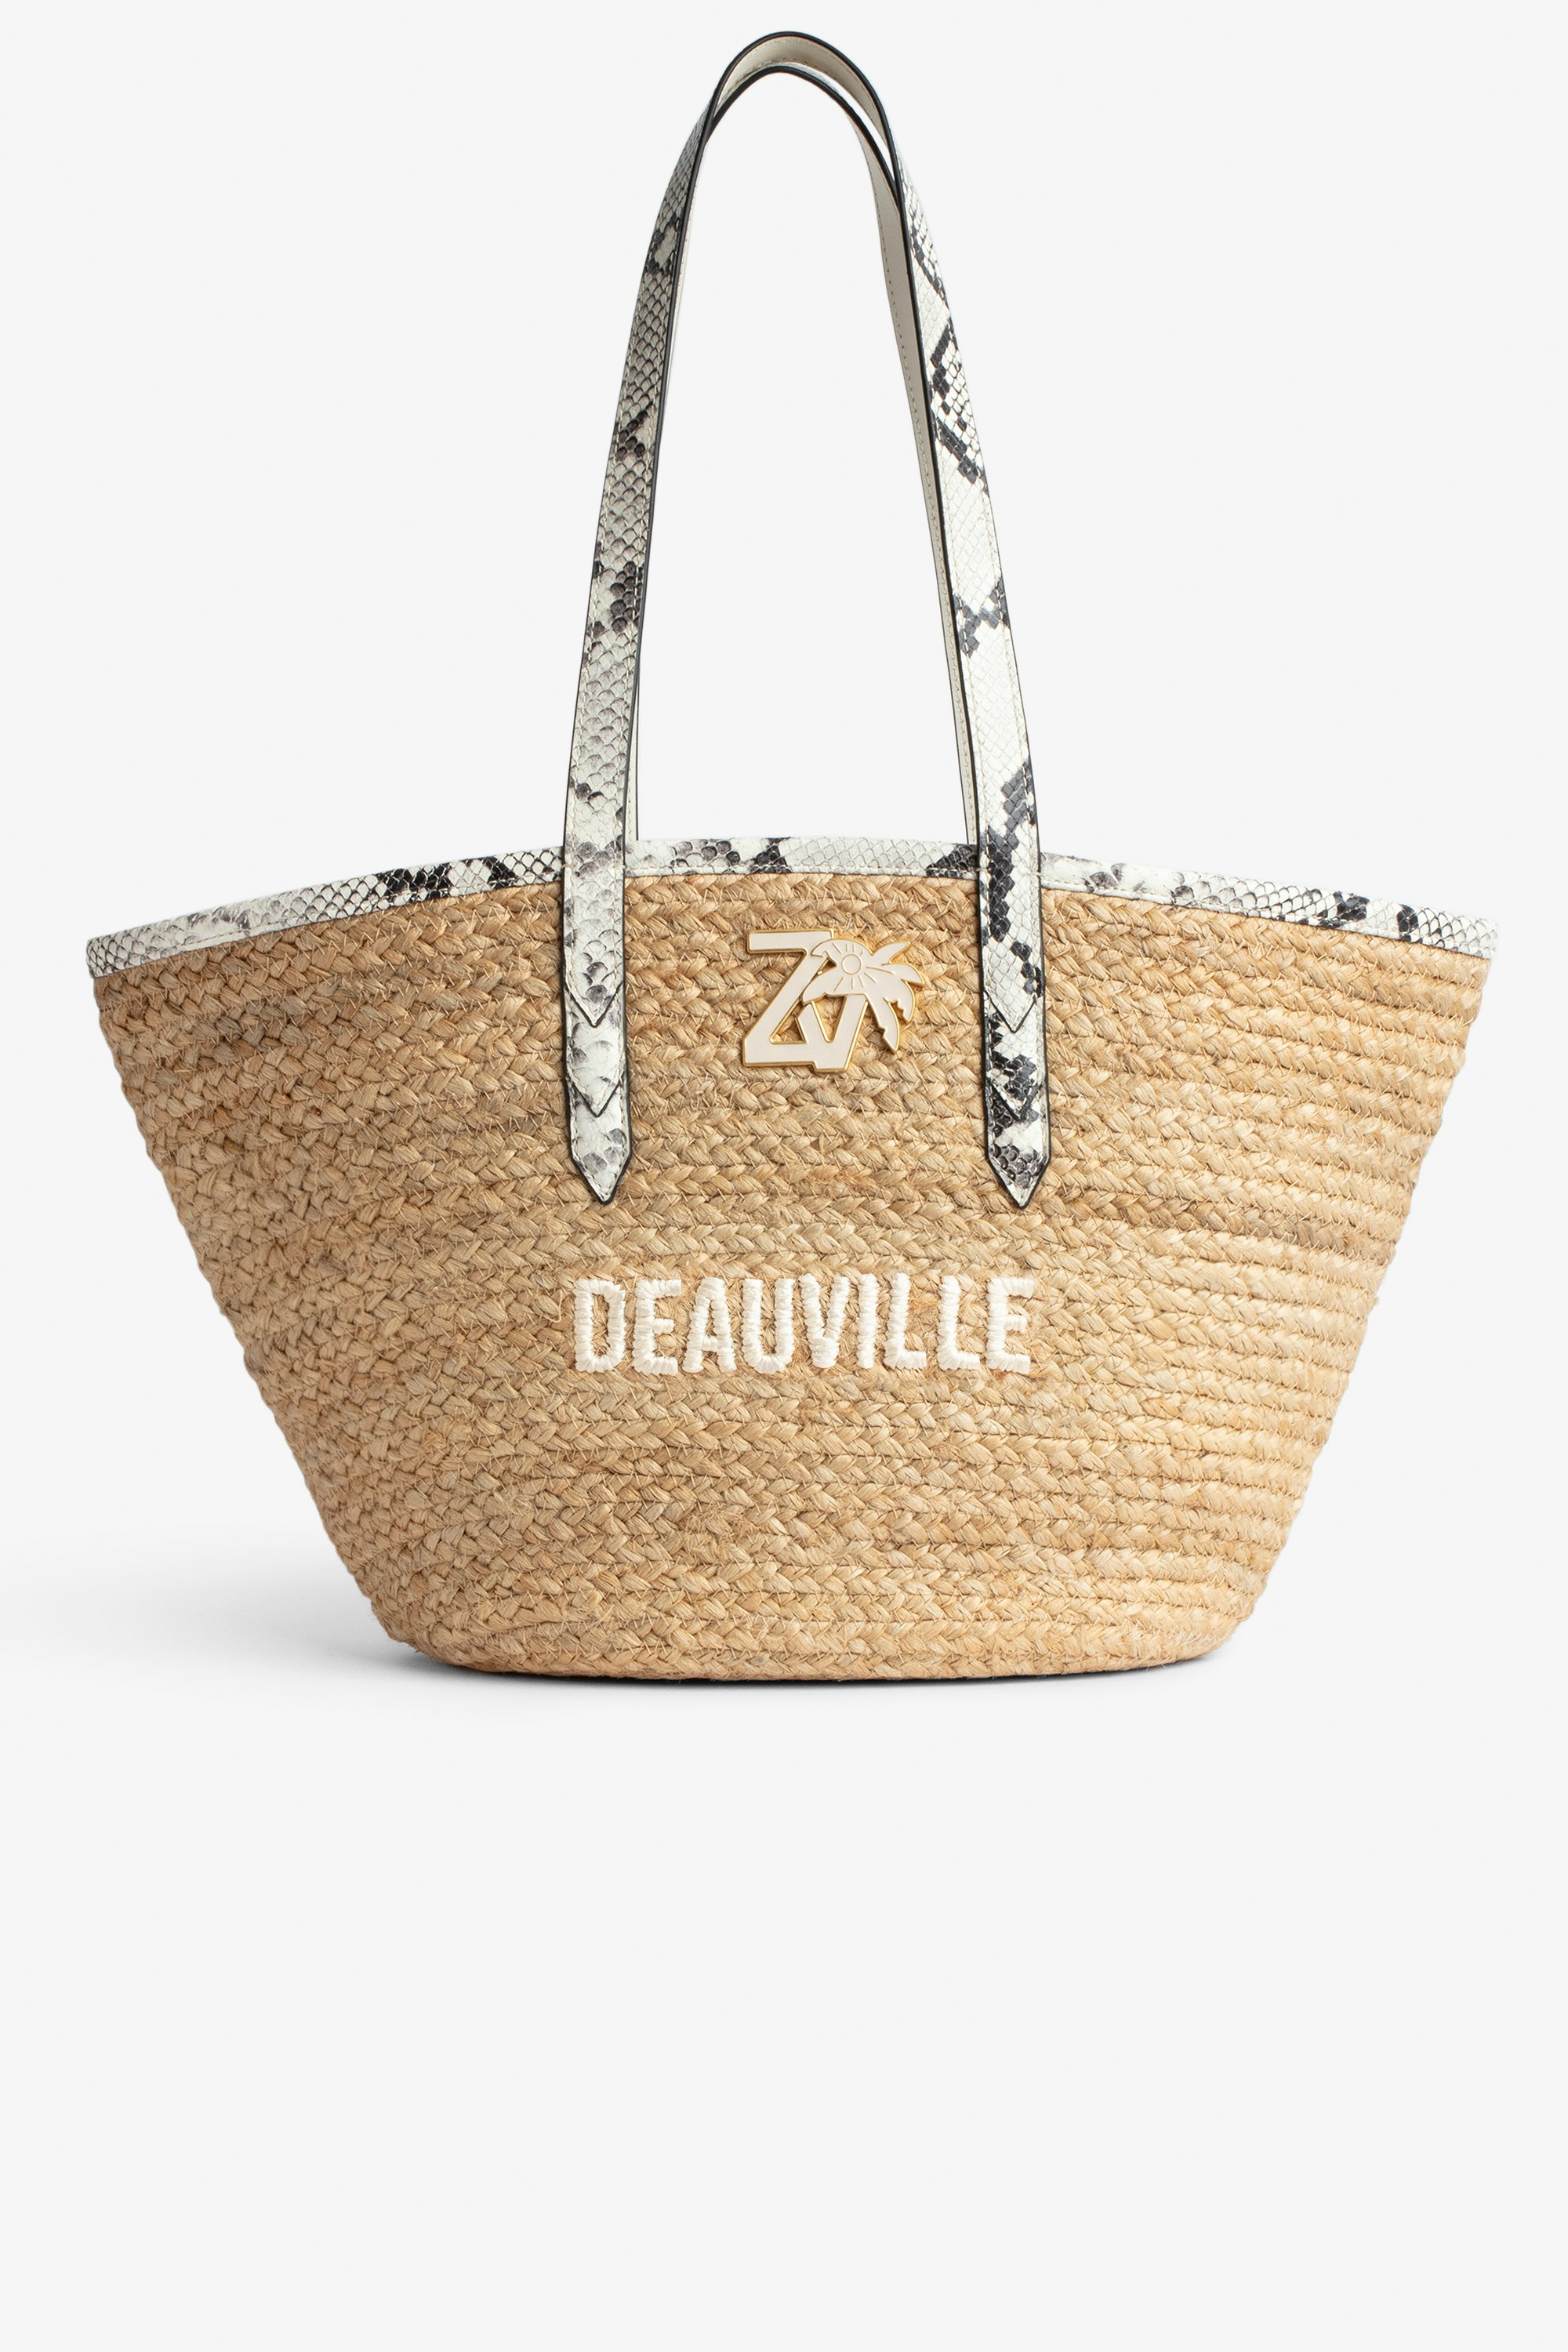 Bolso Le Beach Bag Bolso de paja con asas de cuero color crudo efecto pitón, bordado «Deauville» y con colgante ZV Mujer